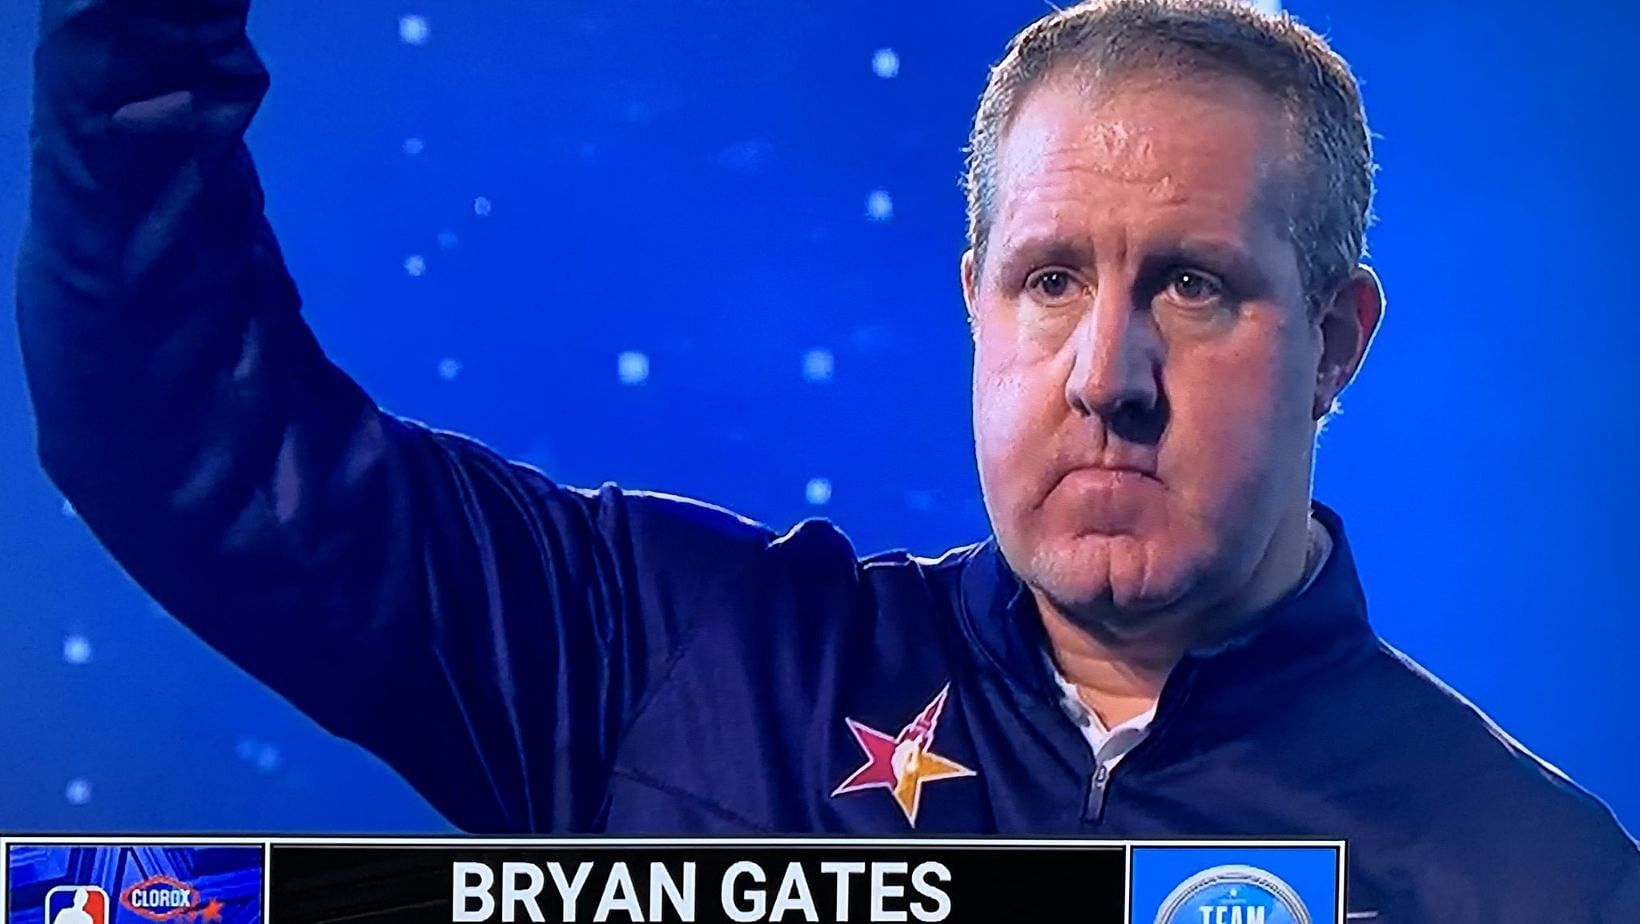 Bryan Gates left Dallas and took his talents to Philadelphia to work under Nick Nurse.